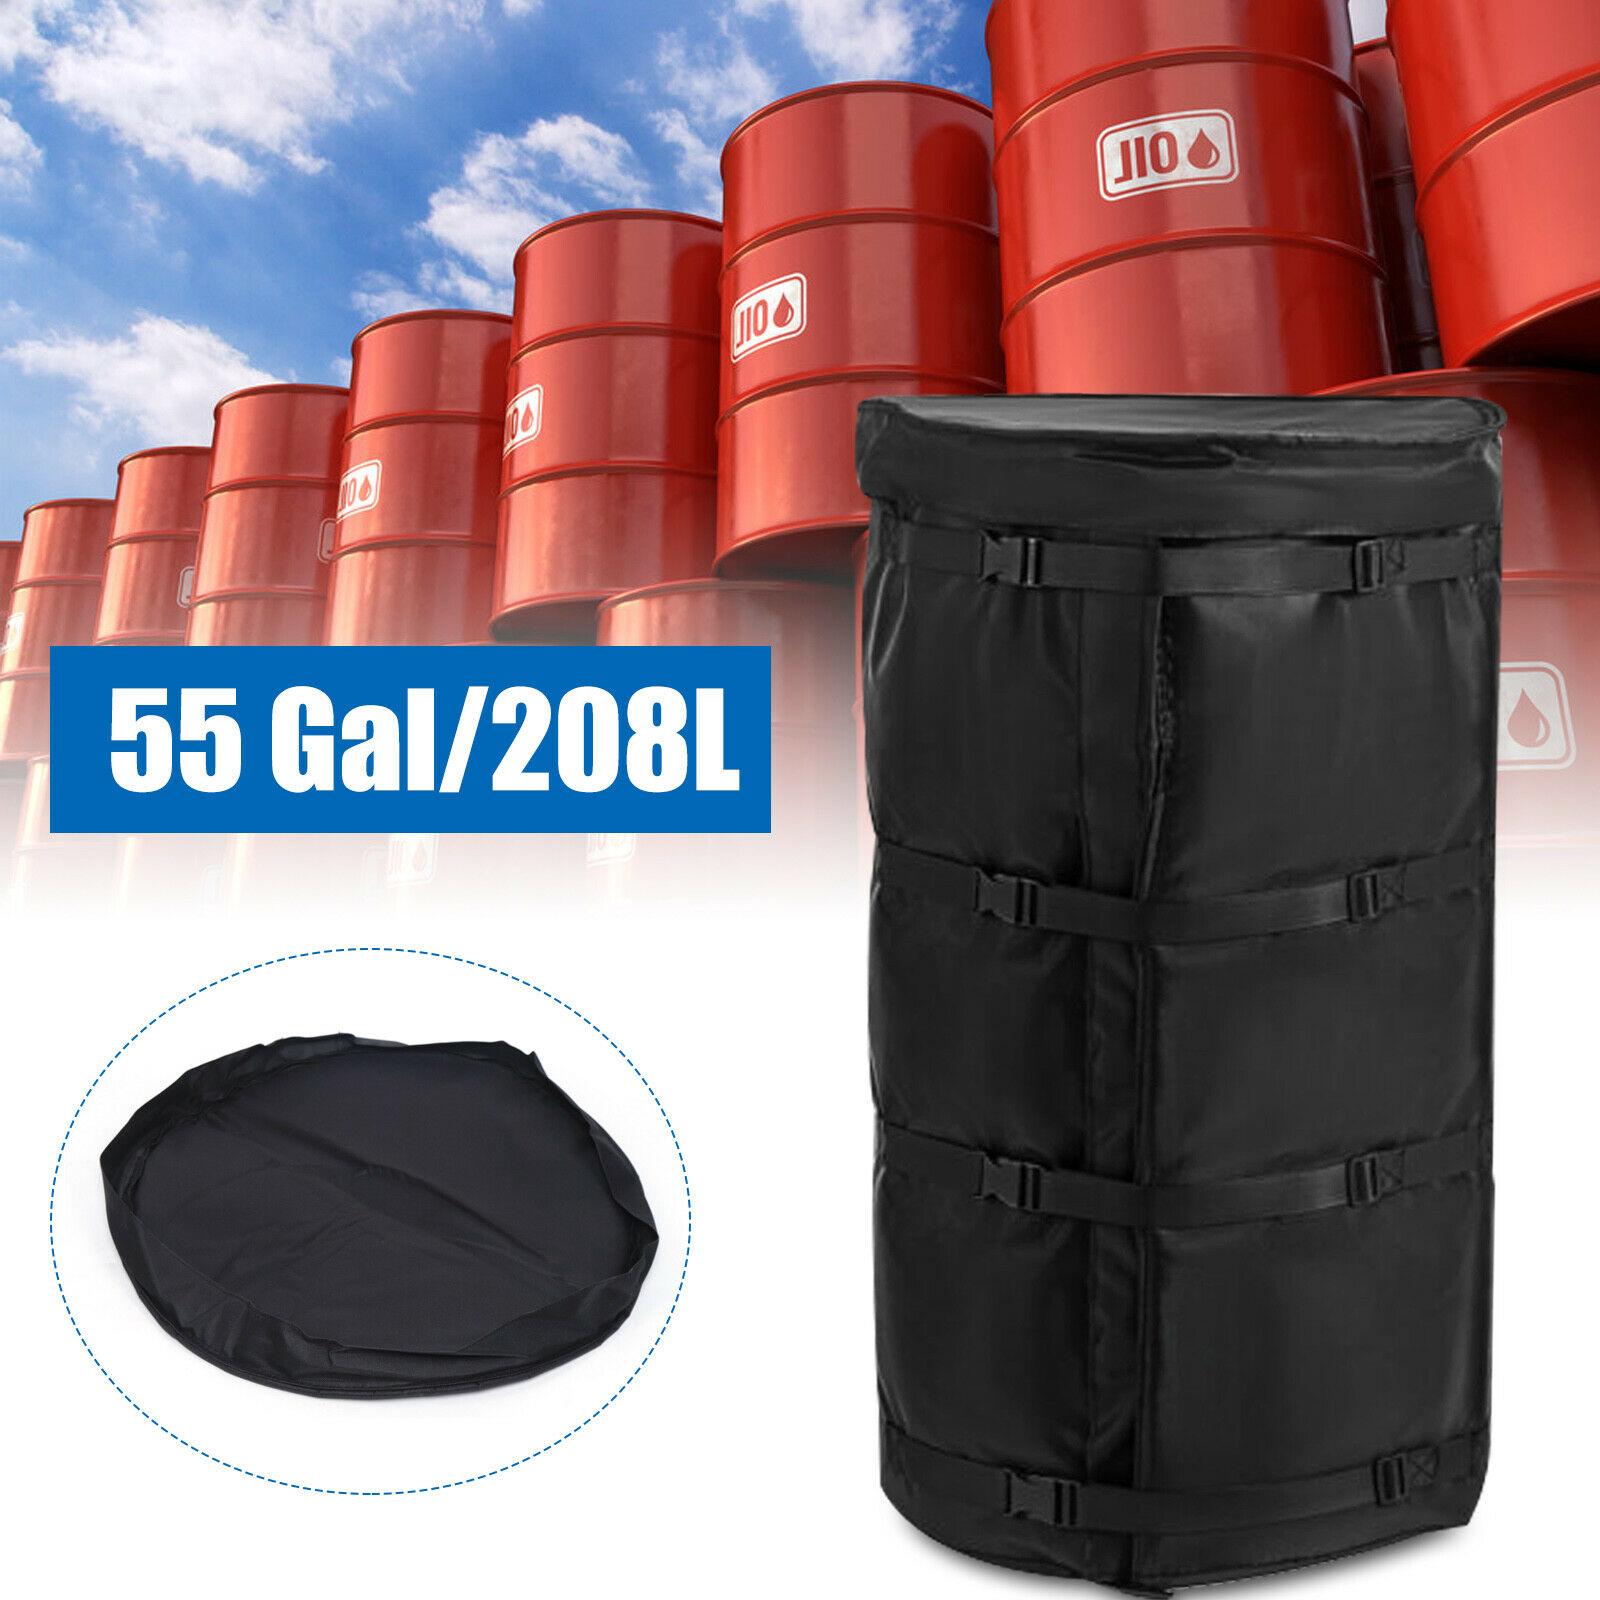 55 Gallon Drum Heating Blanket - Barrel Heater - 208l Drum Blanket 1100w 110v